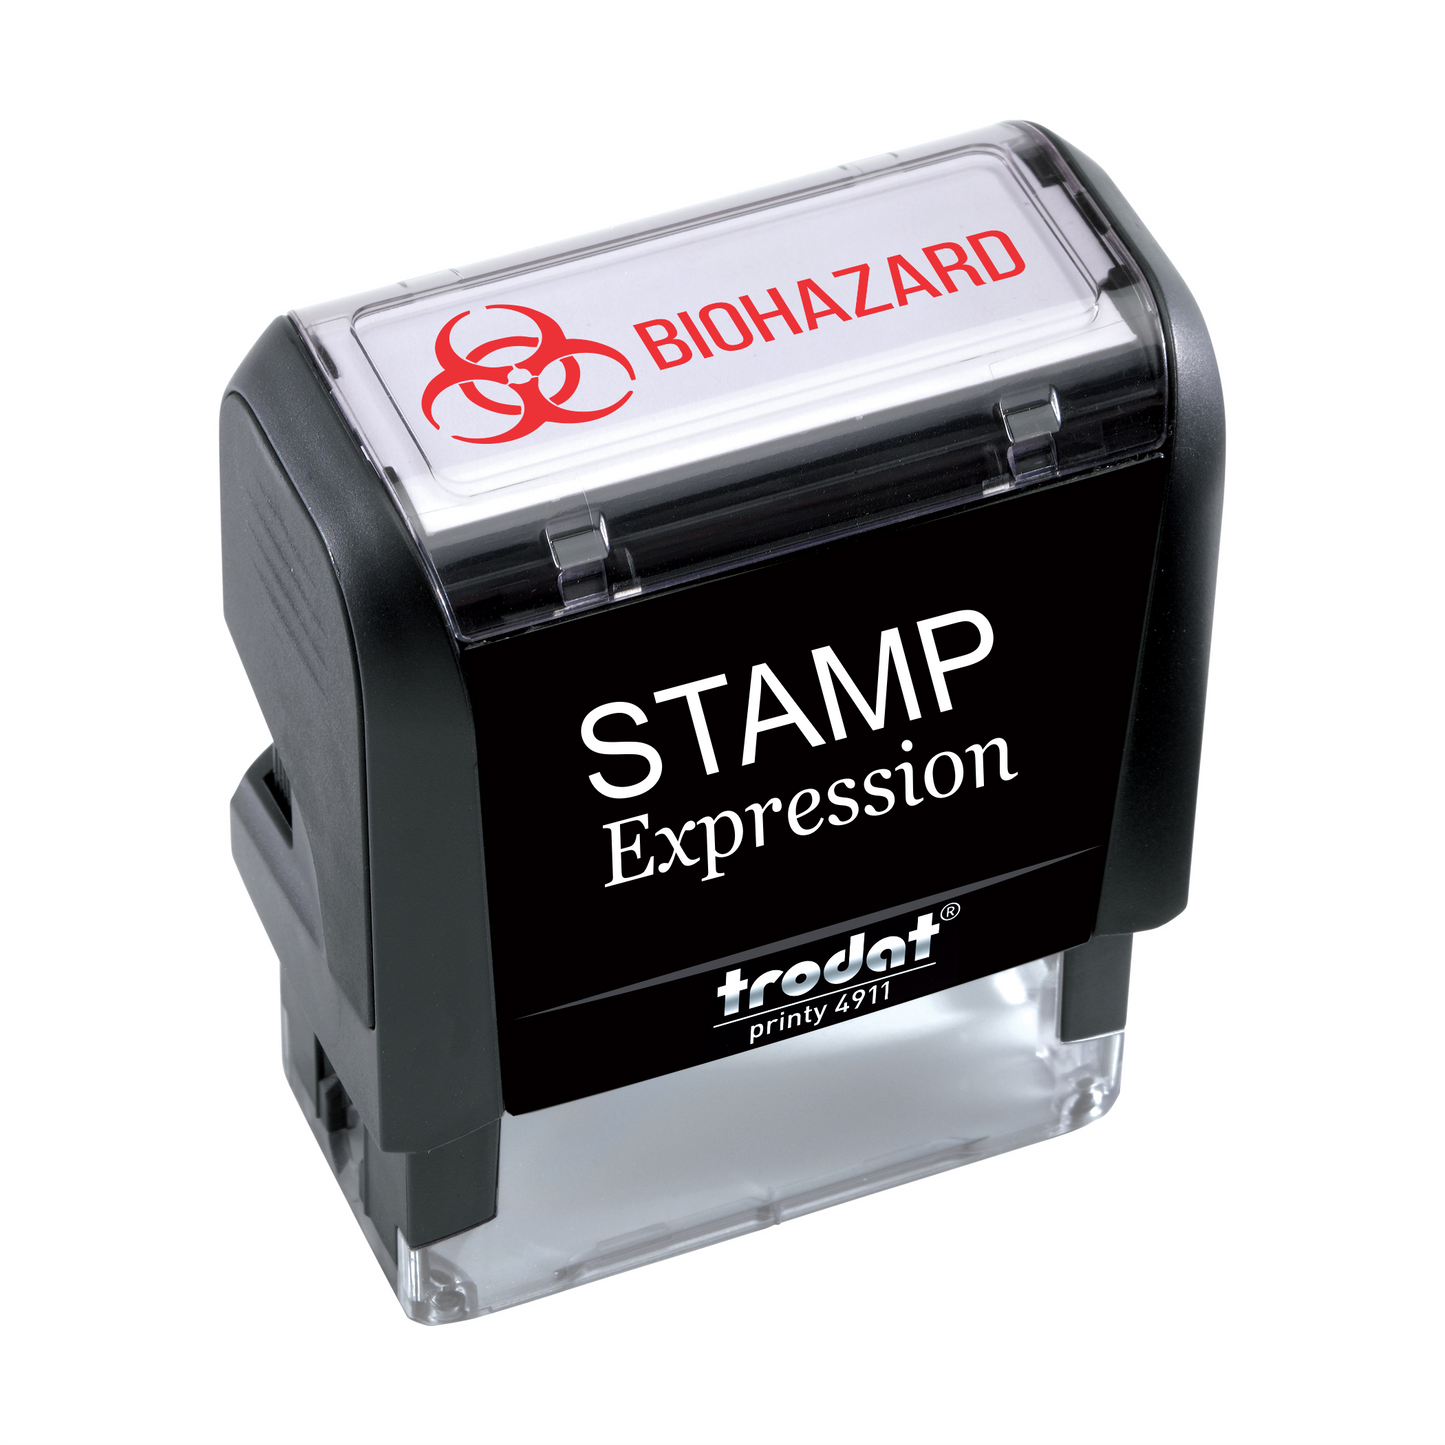 Biohazard Office Self Inking Rubber Stamp (SH-5911)